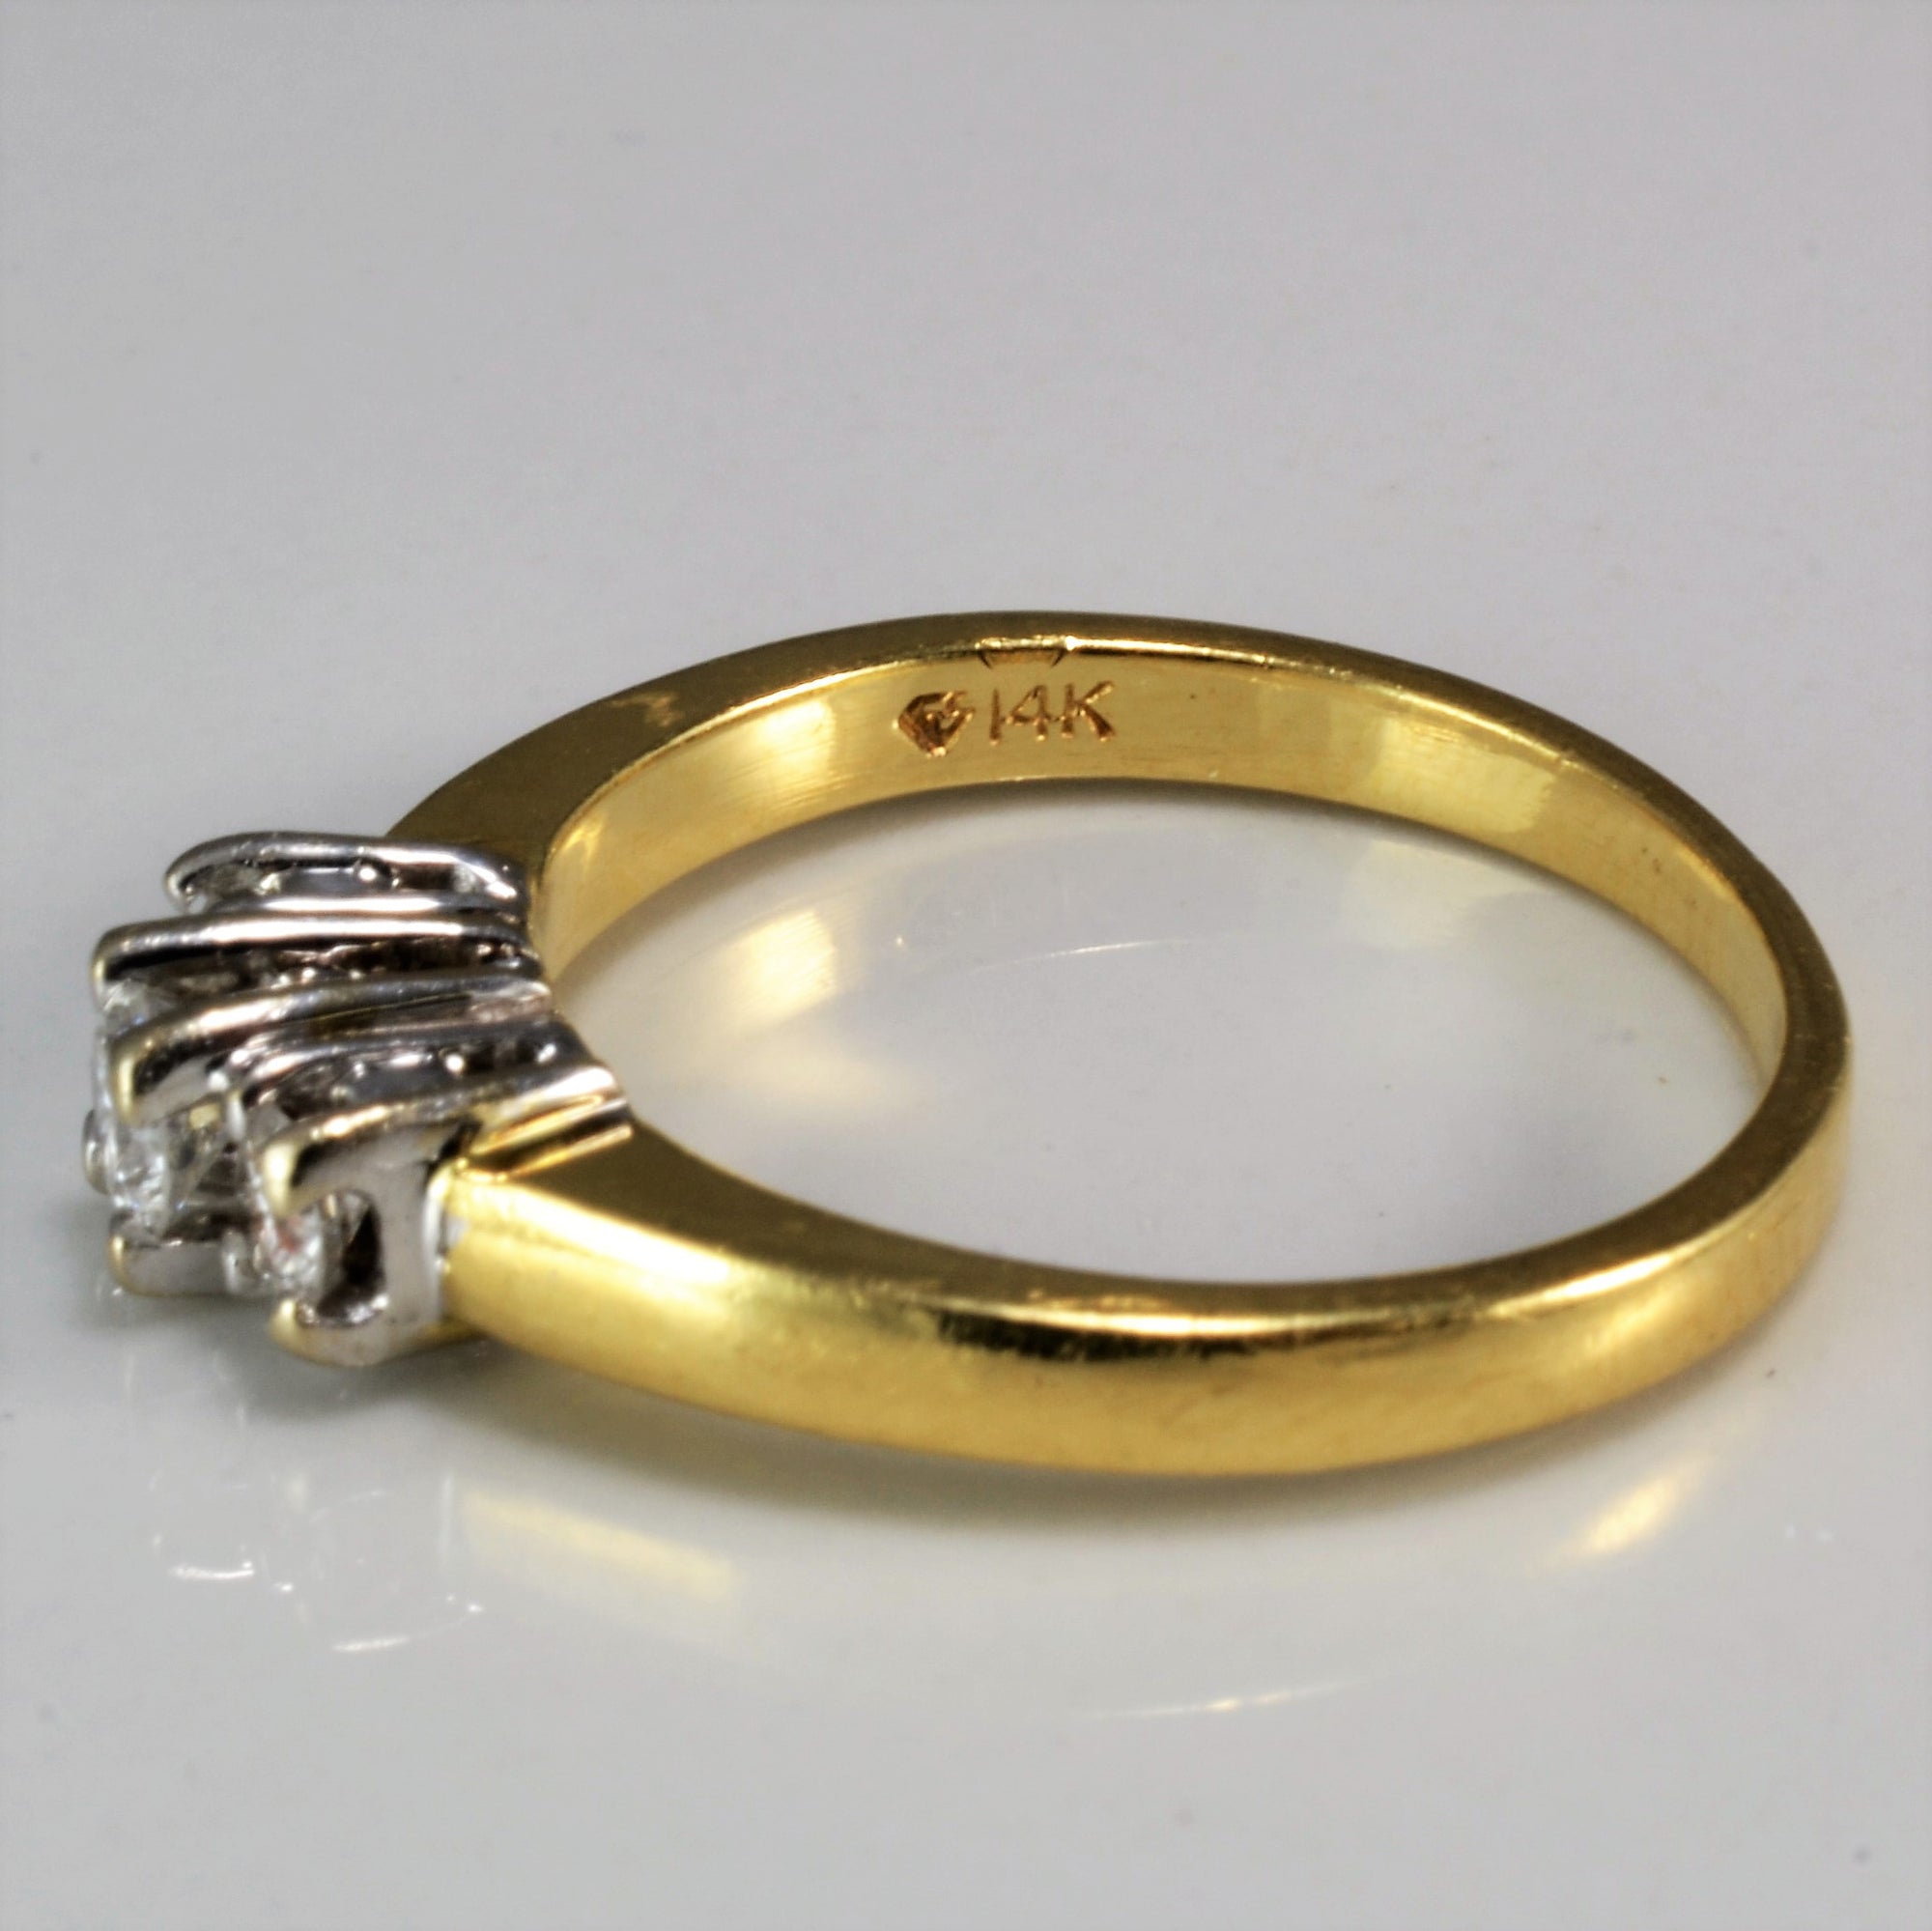 Three Stone Prong Set Diamond Ring | 0.26 ctw, SZ 5.75 |